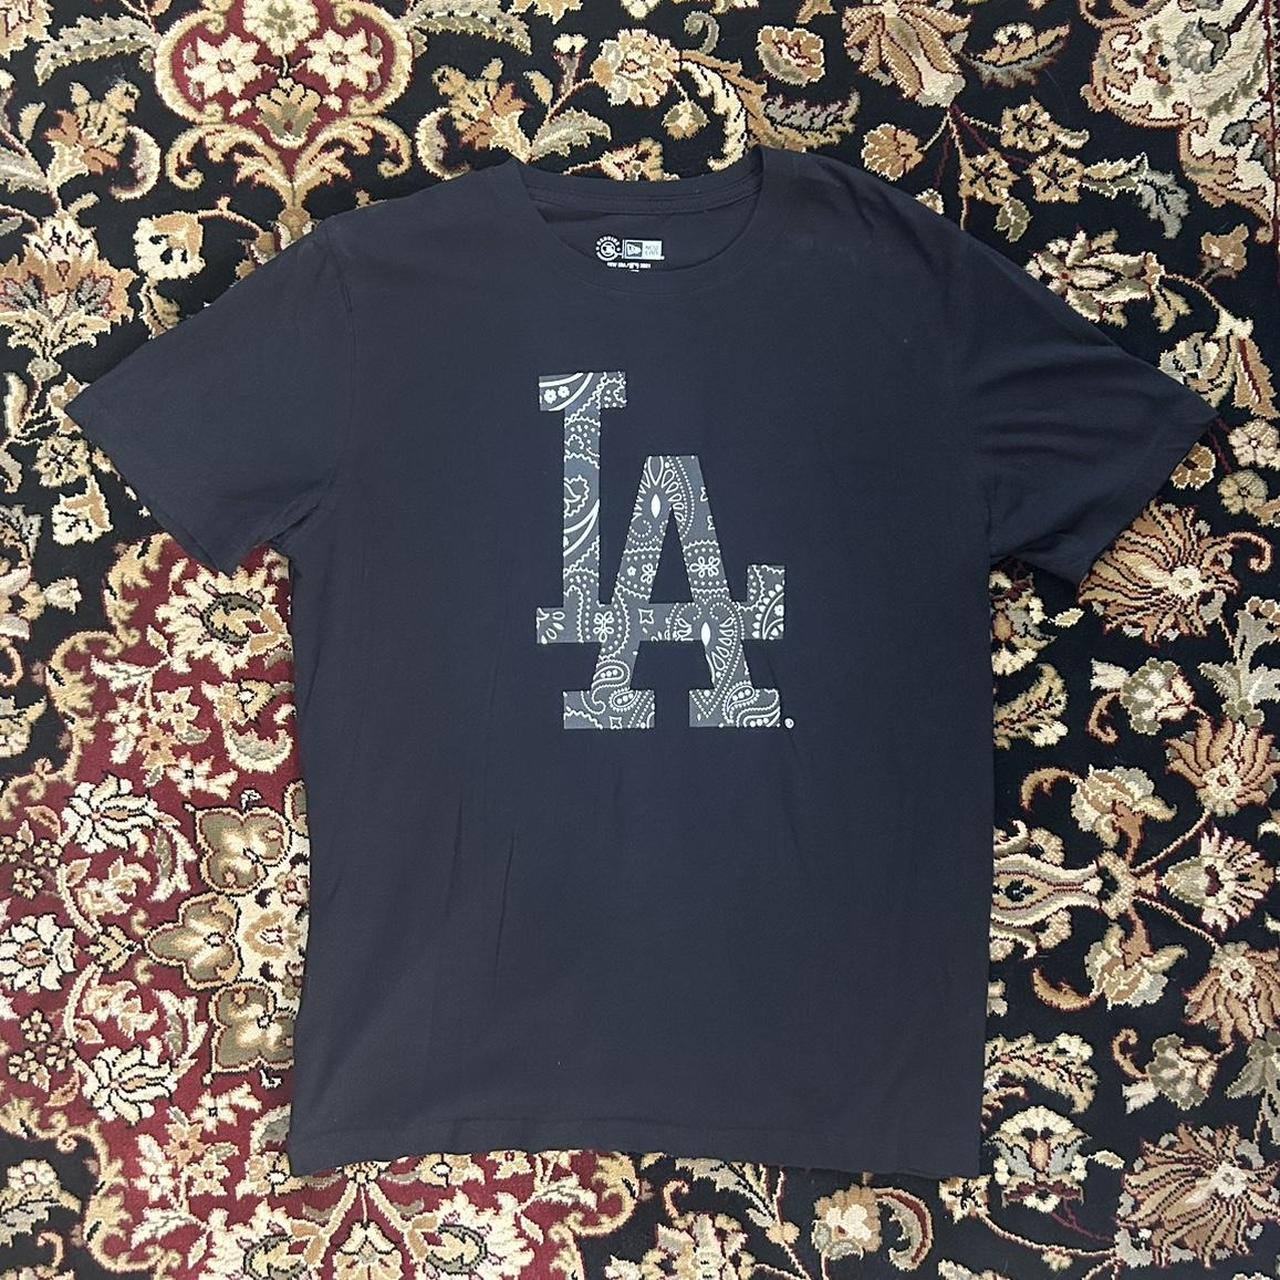 Men's T-Shirt New Era La Dodgers Photo Print Black T-Shirt Black